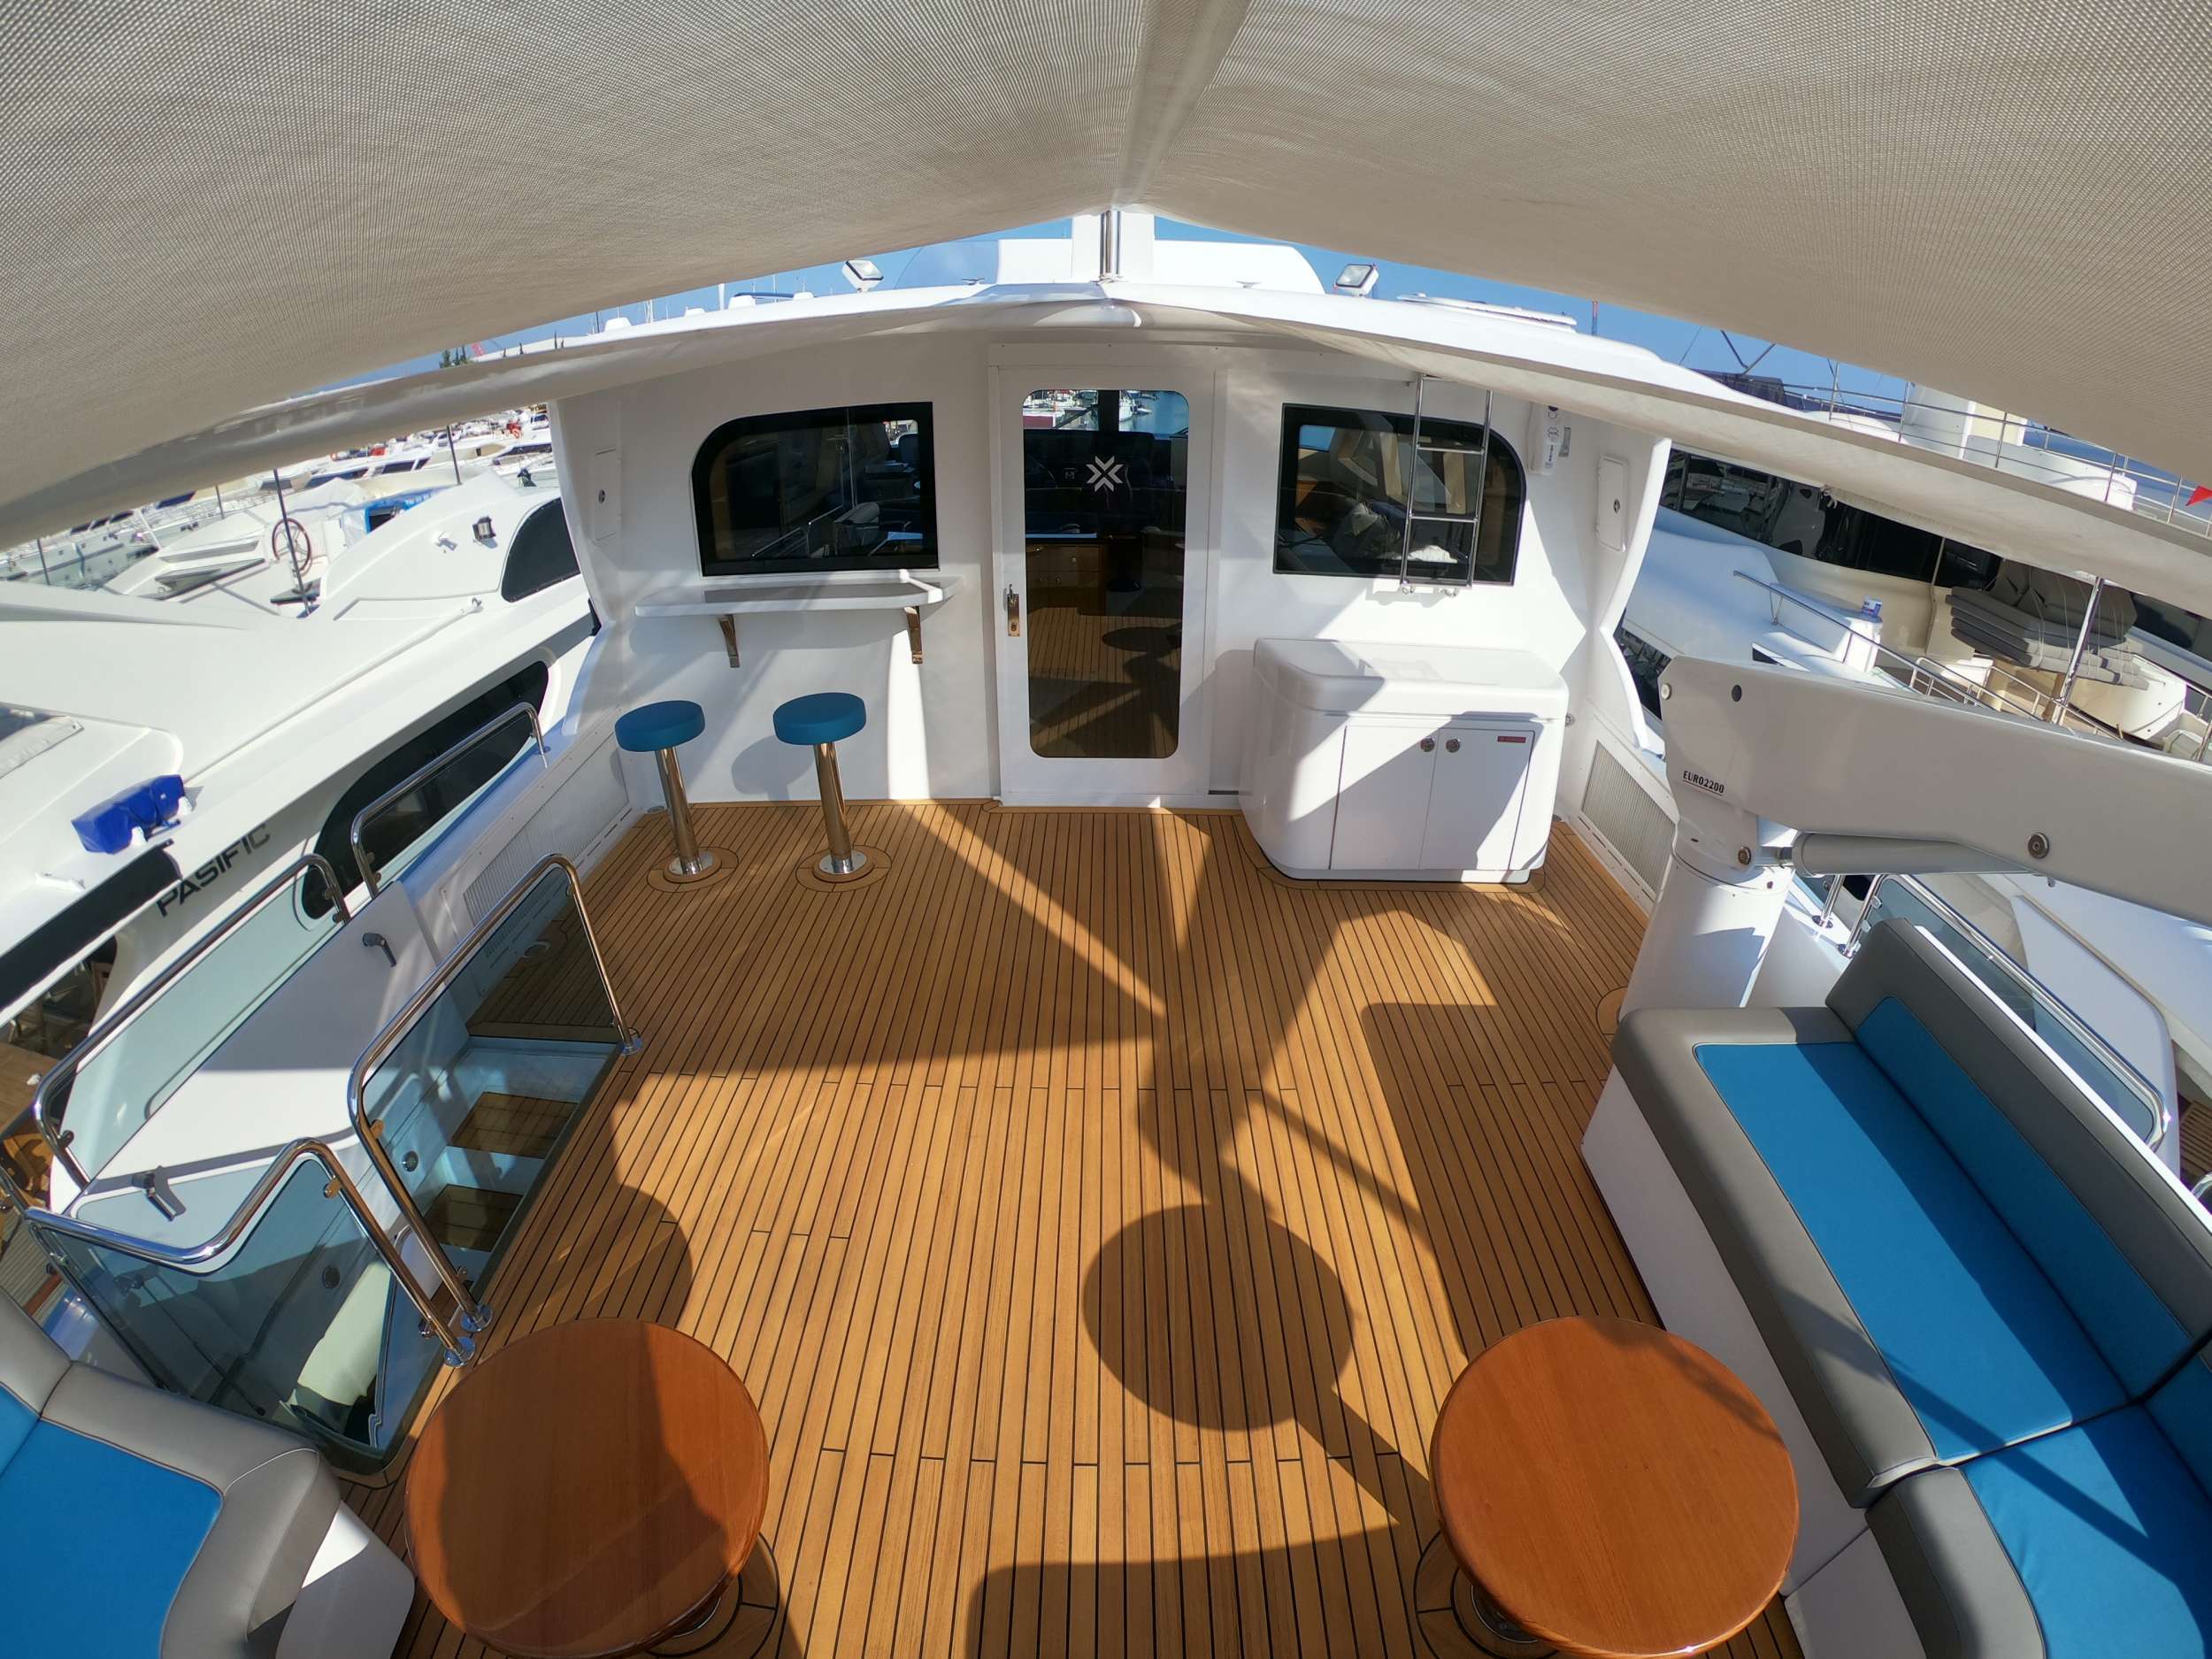 TOP SHELF - Luxury yacht charter St Martin & Boat hire in Caribbean 6